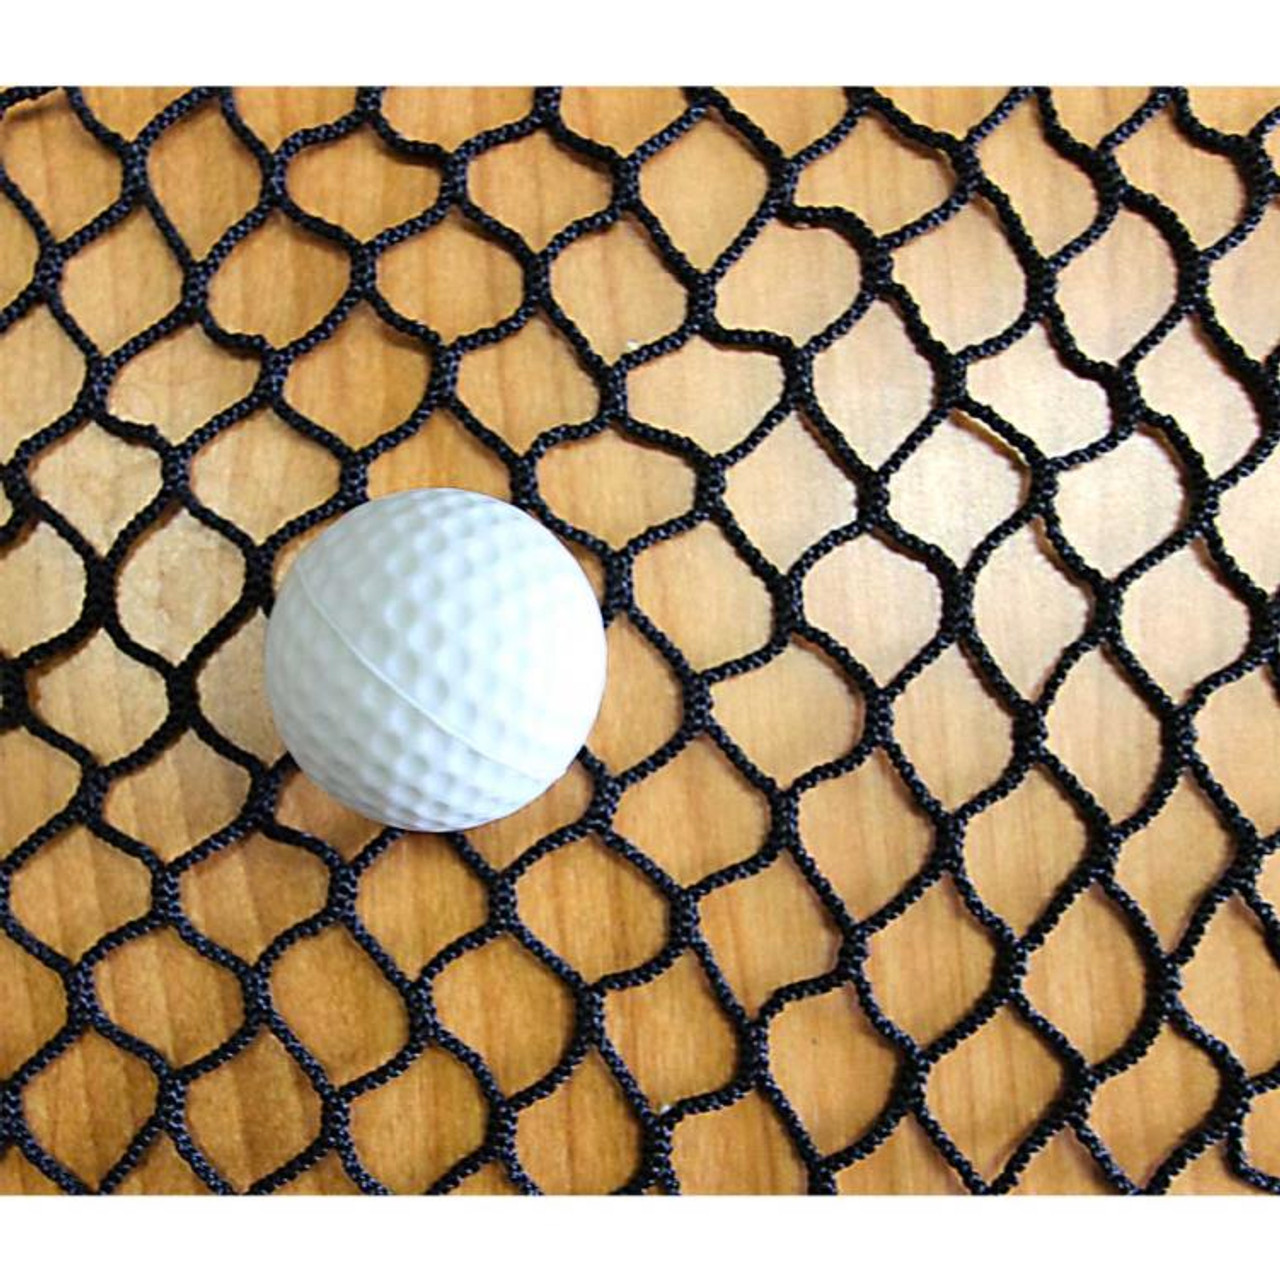 Golf Netting